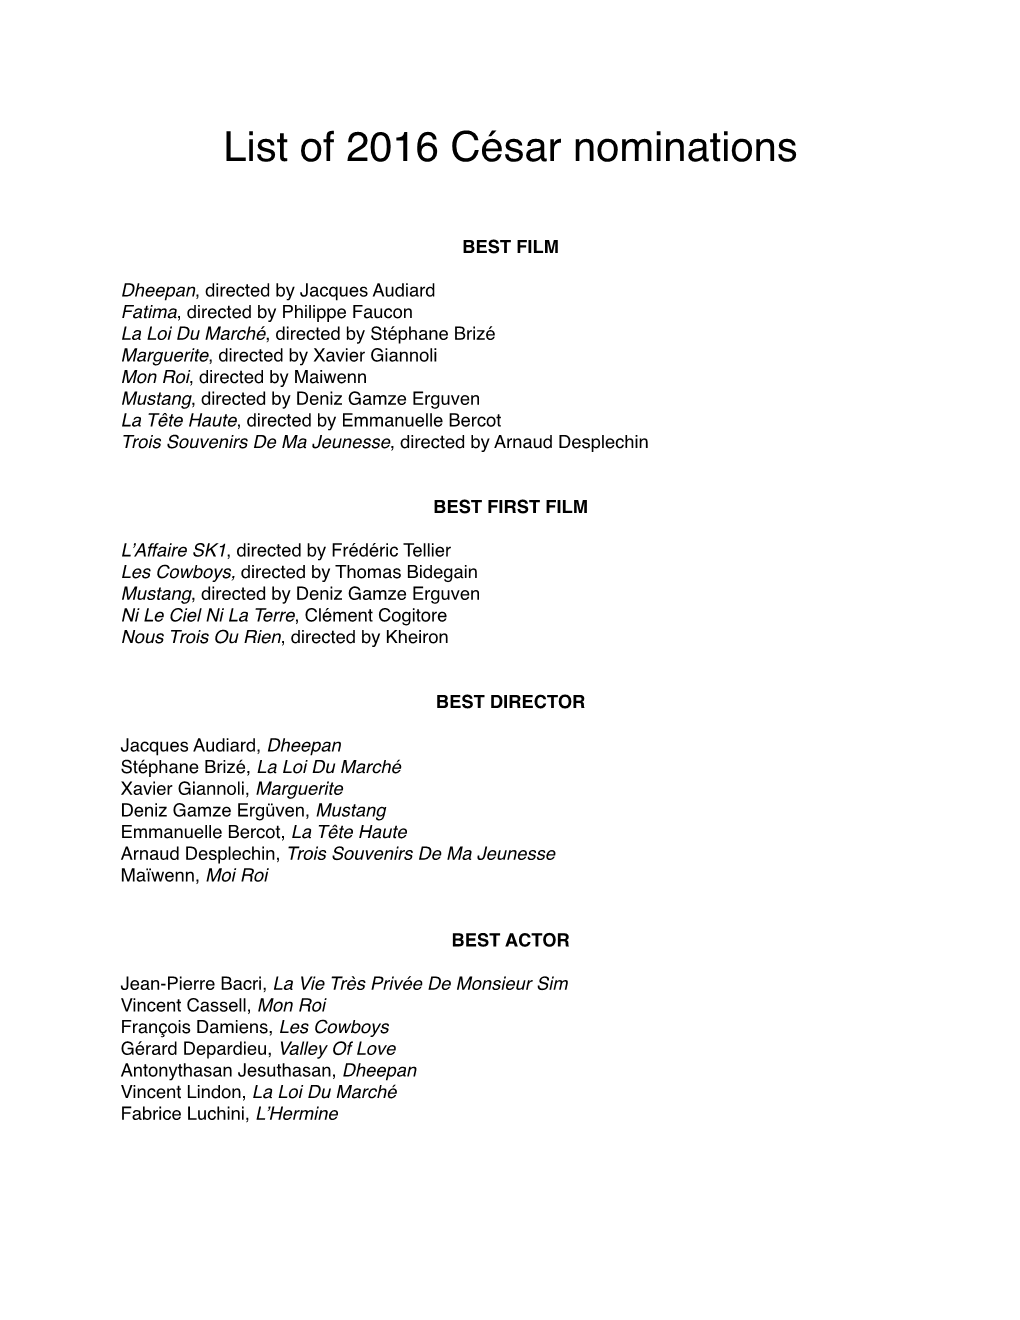 List of Cesar Nominations 2016